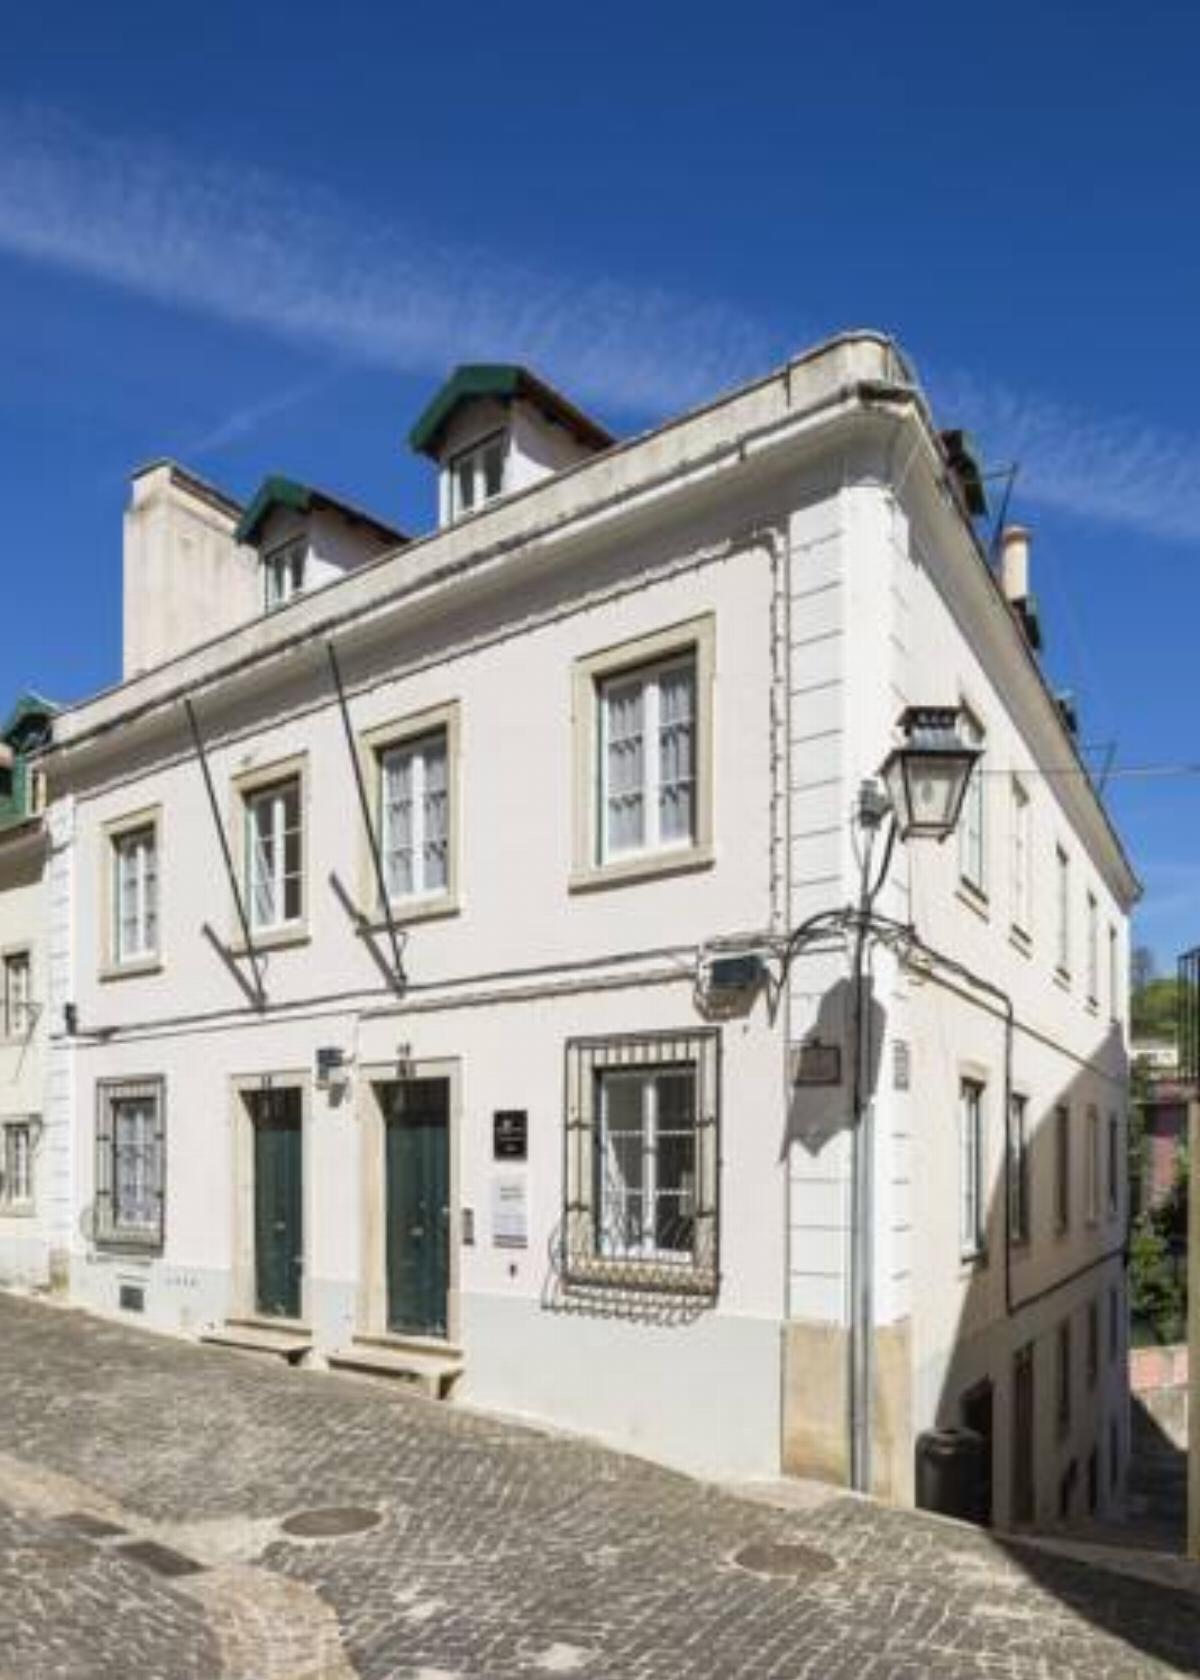 Casa da Pendoa Hotel Sintra Portugal